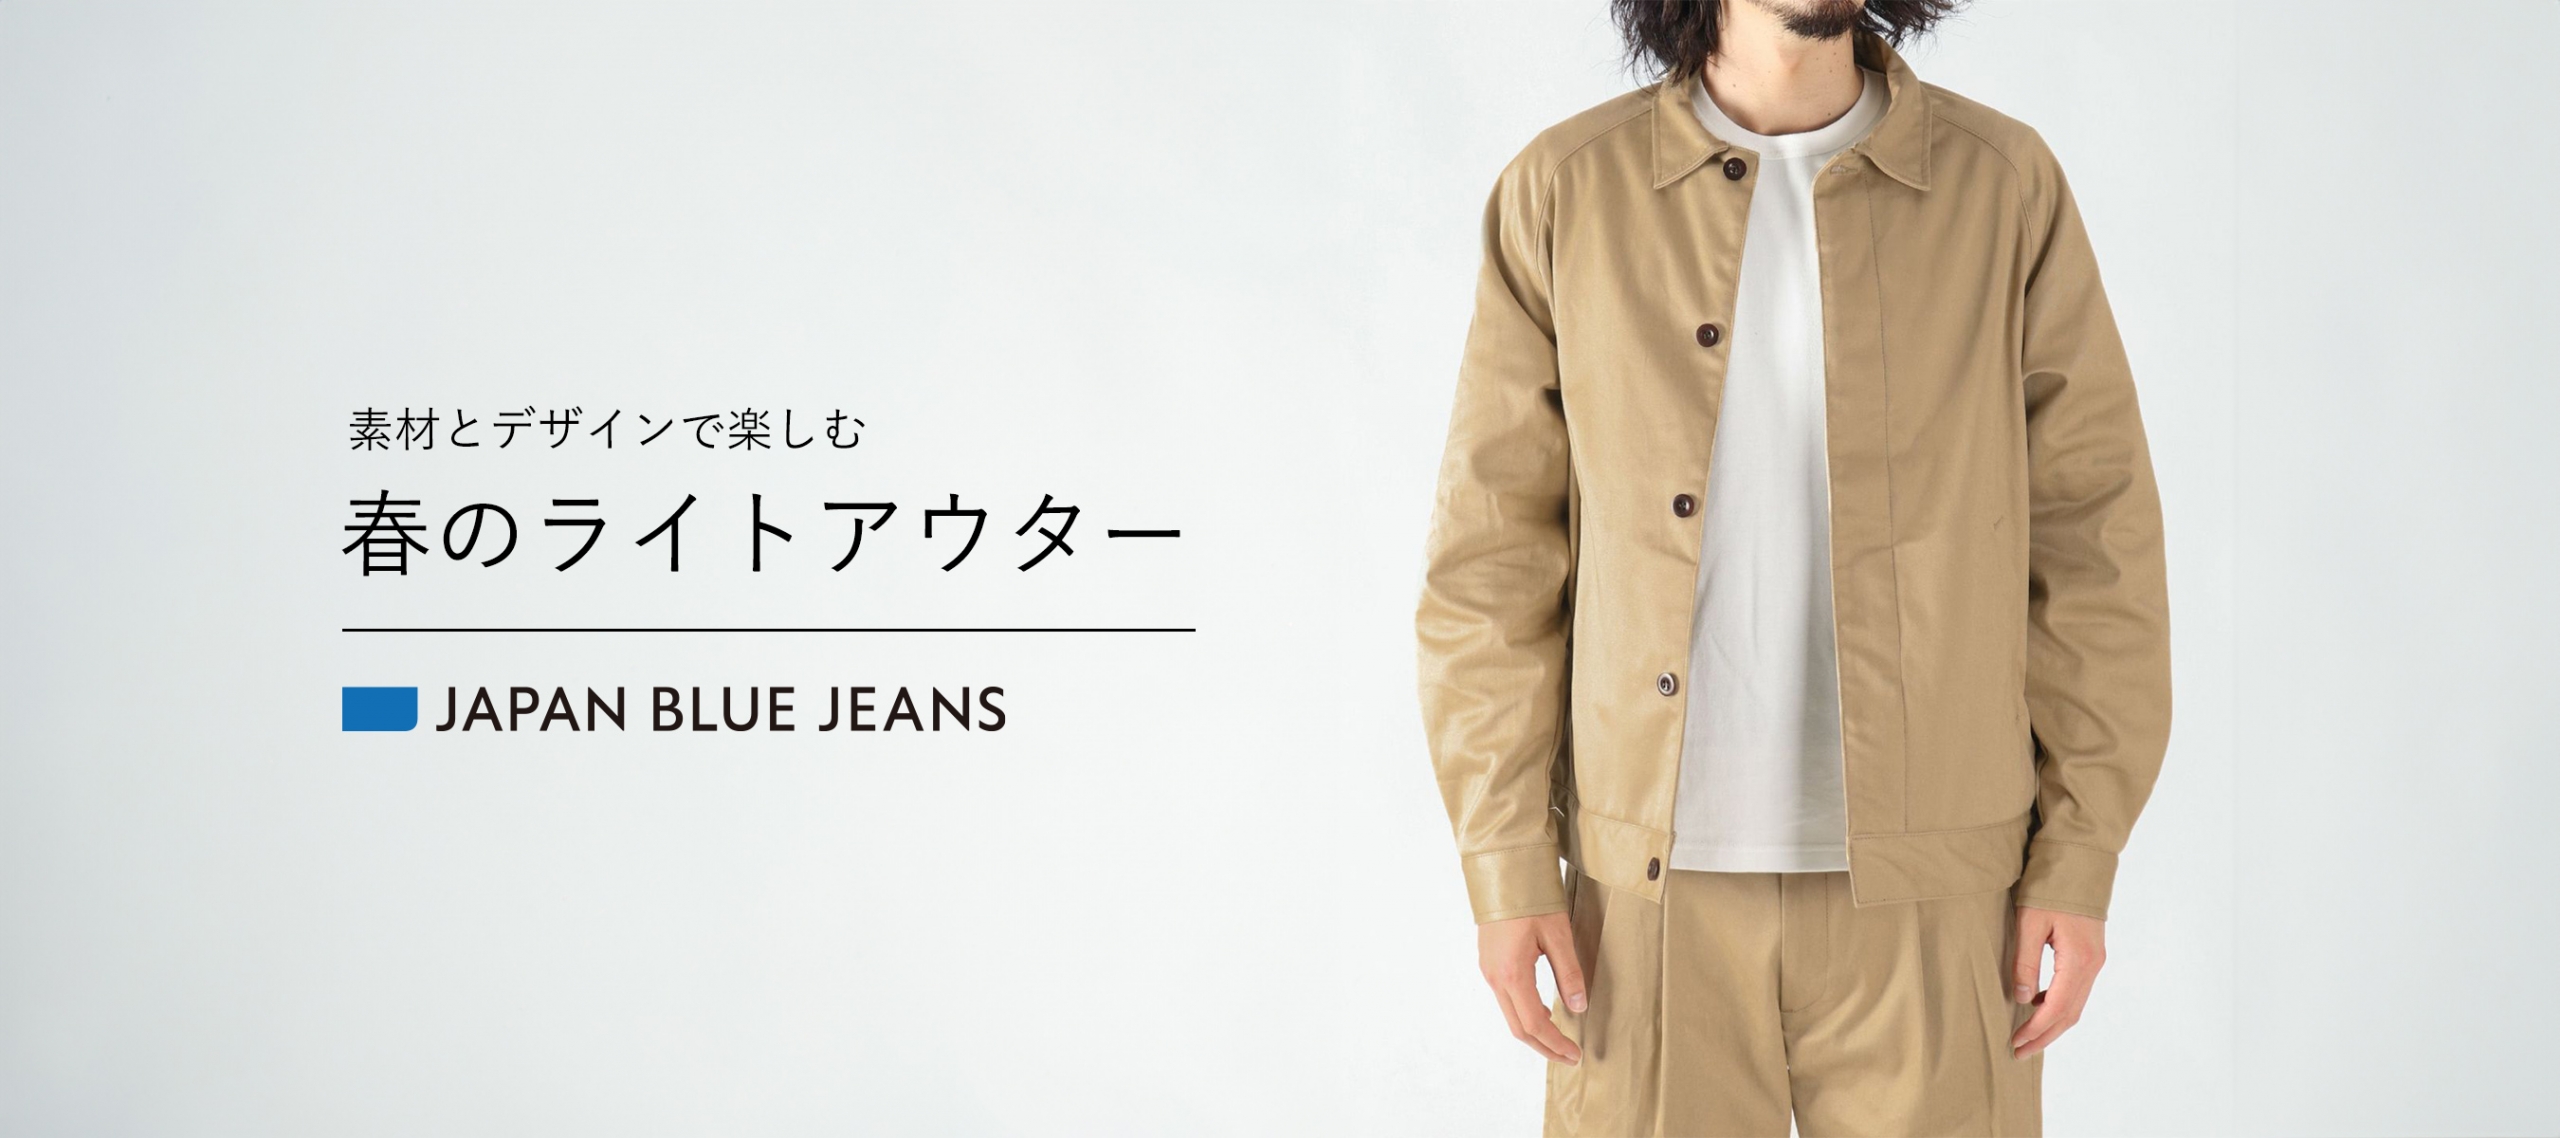 JAPAN BLUE JEANS,3oz Miracle Light Denim Shirts